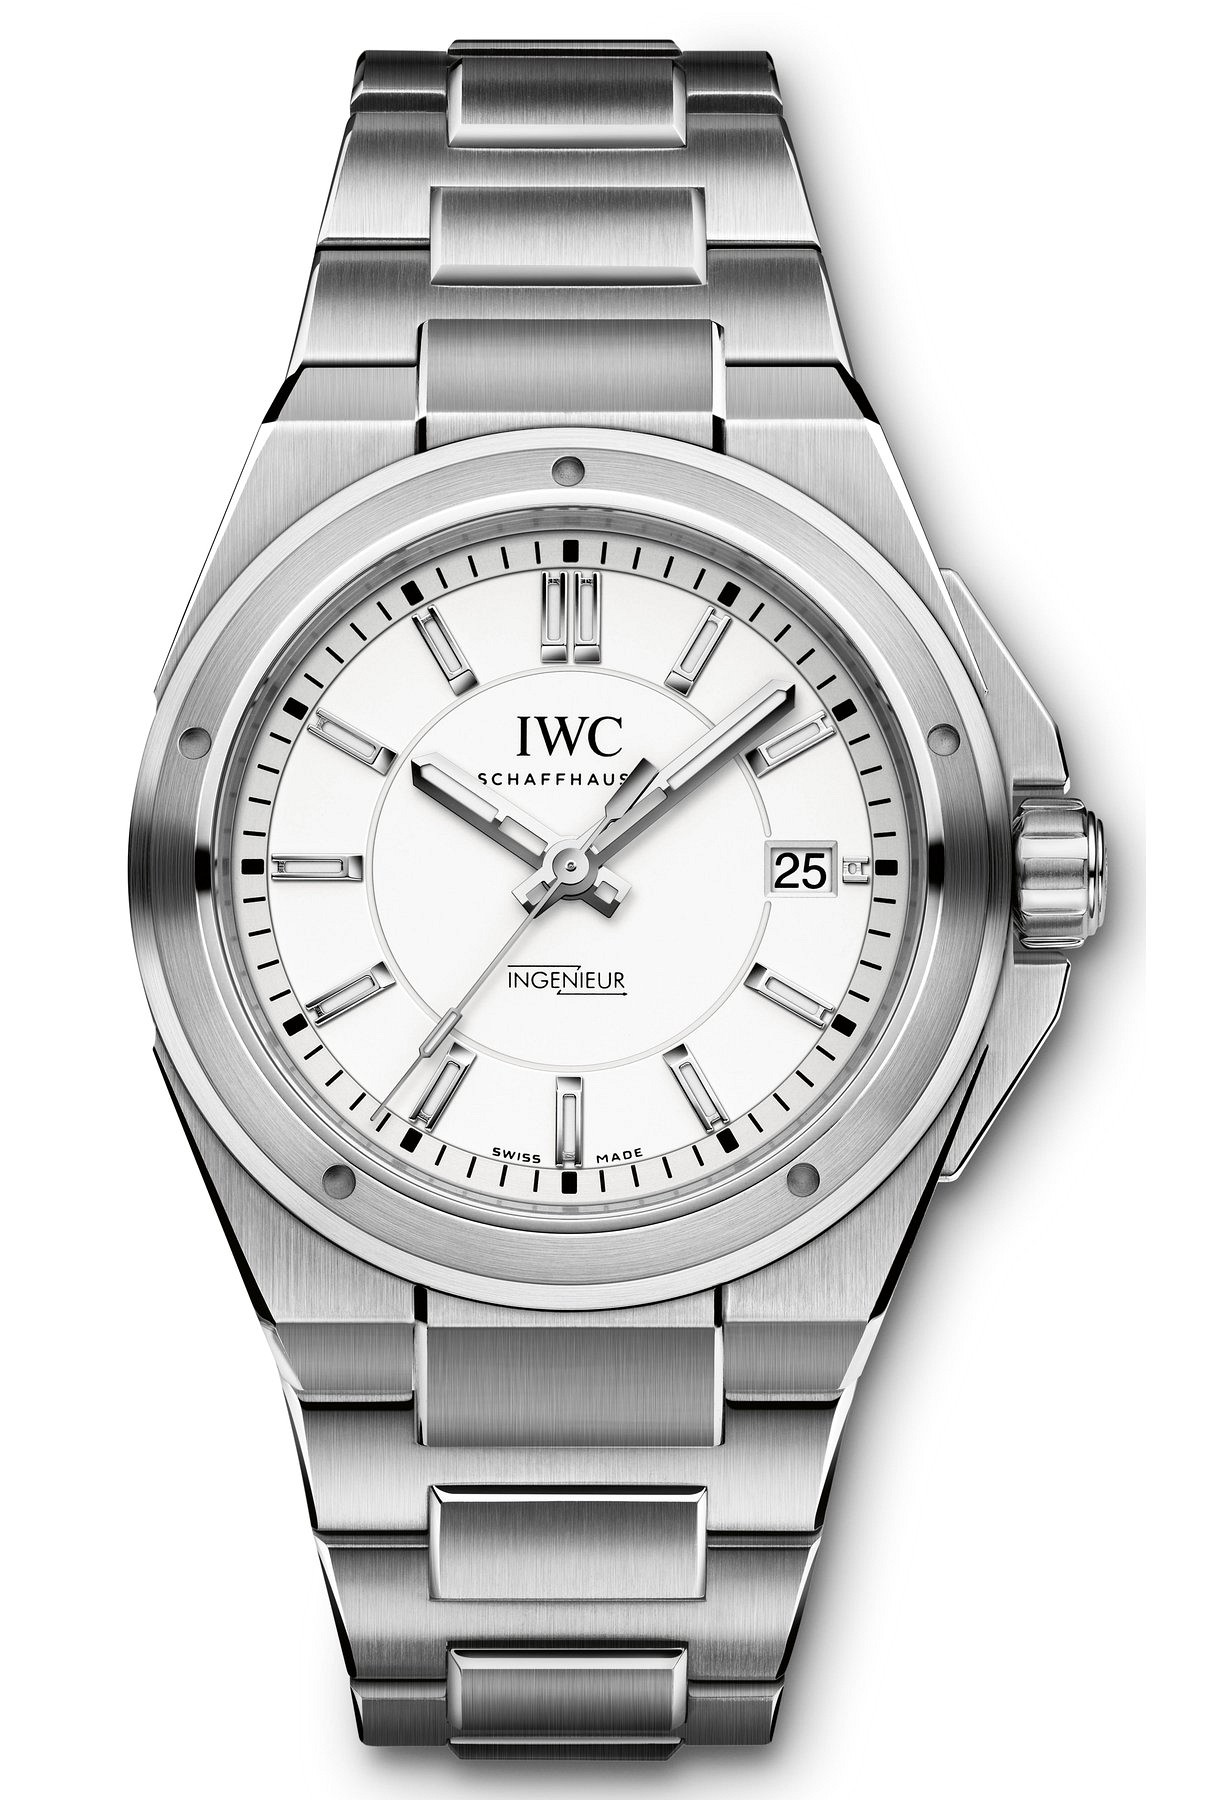 IWC Ingenieur IW3239-04